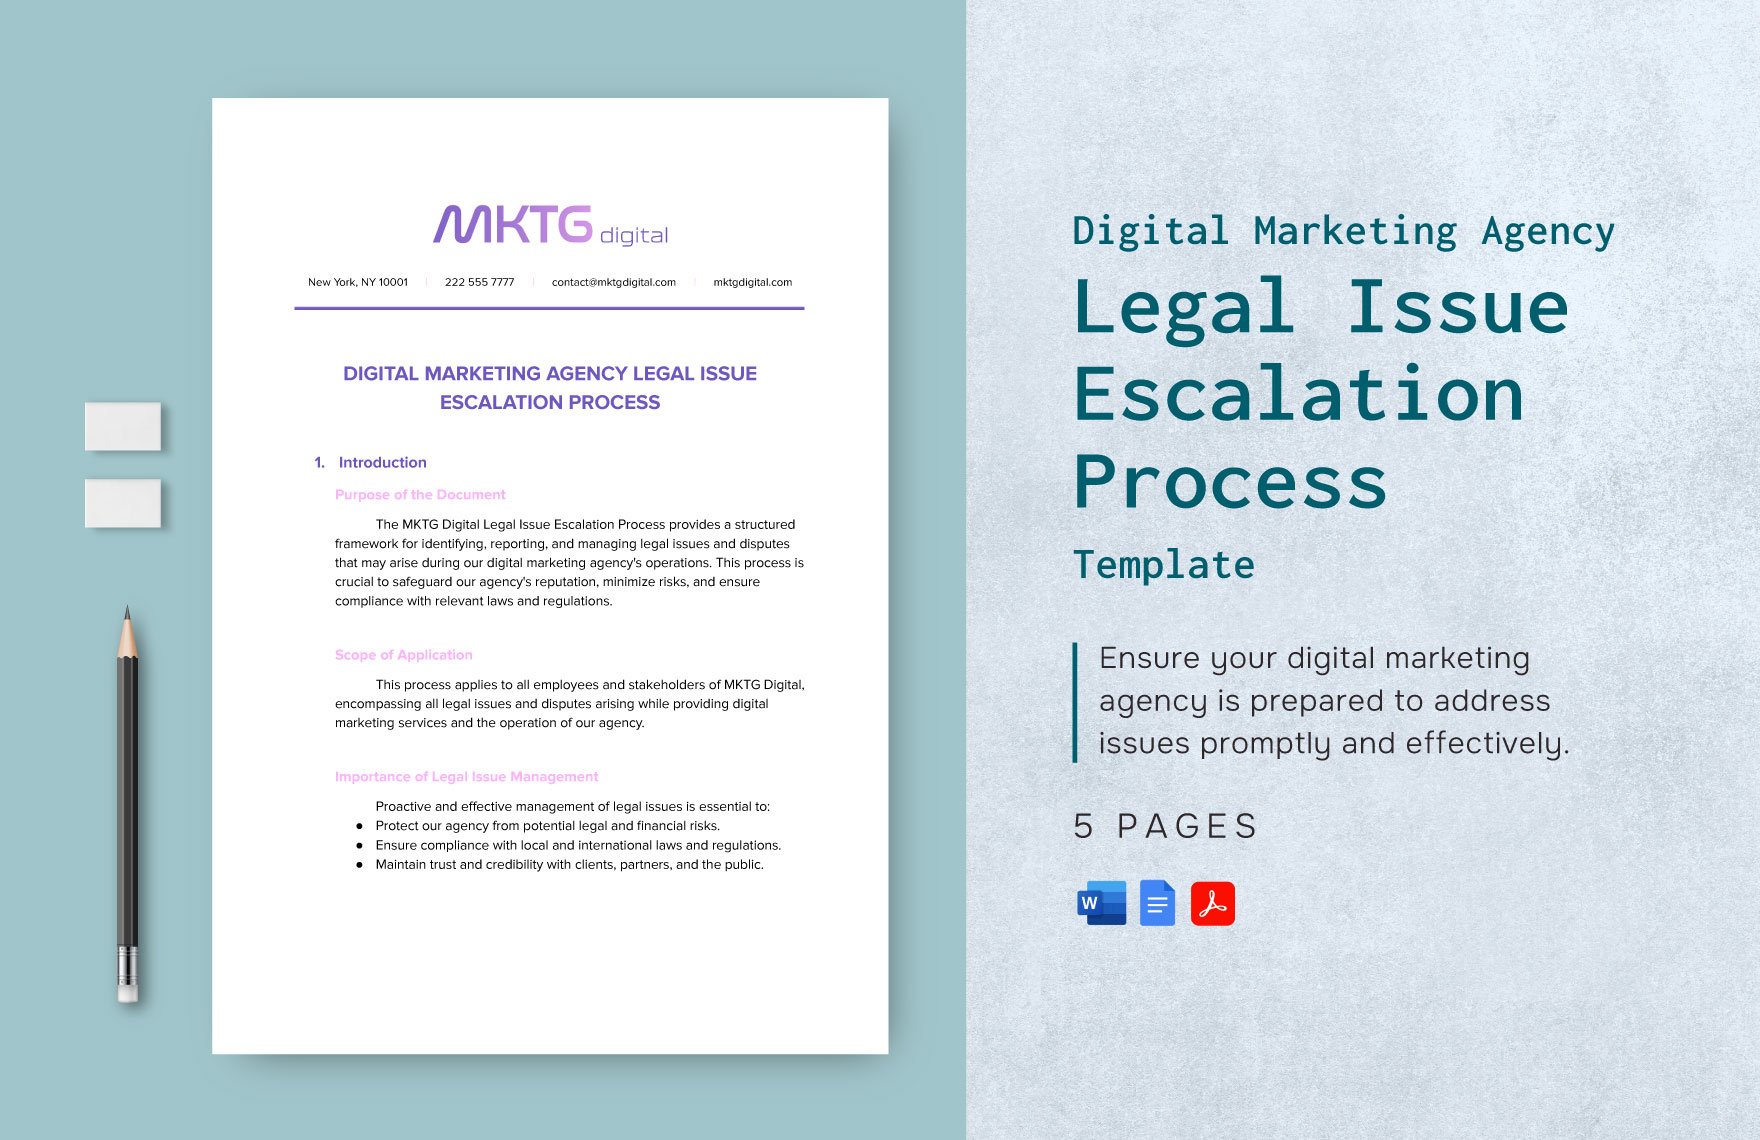 Digital Marketing Agency Legal Issue Escalation Process Template